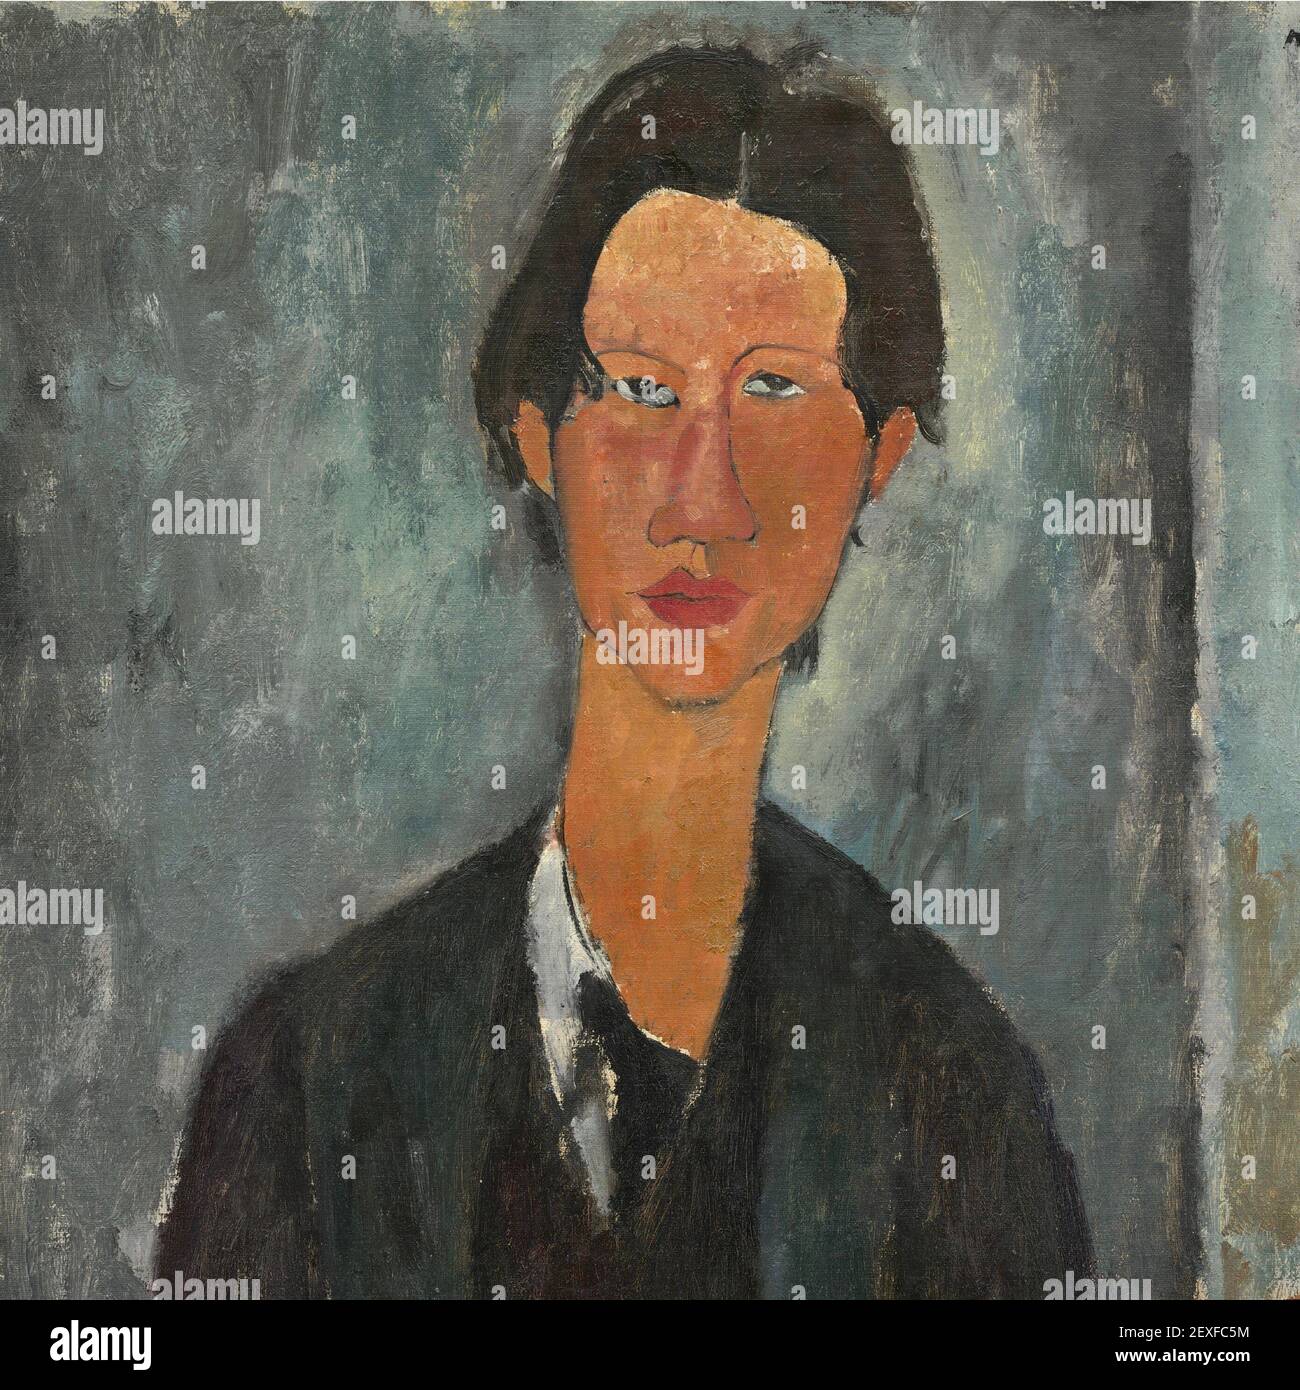 Modigliani portrait painting of Chaim Soutine Stock Photo